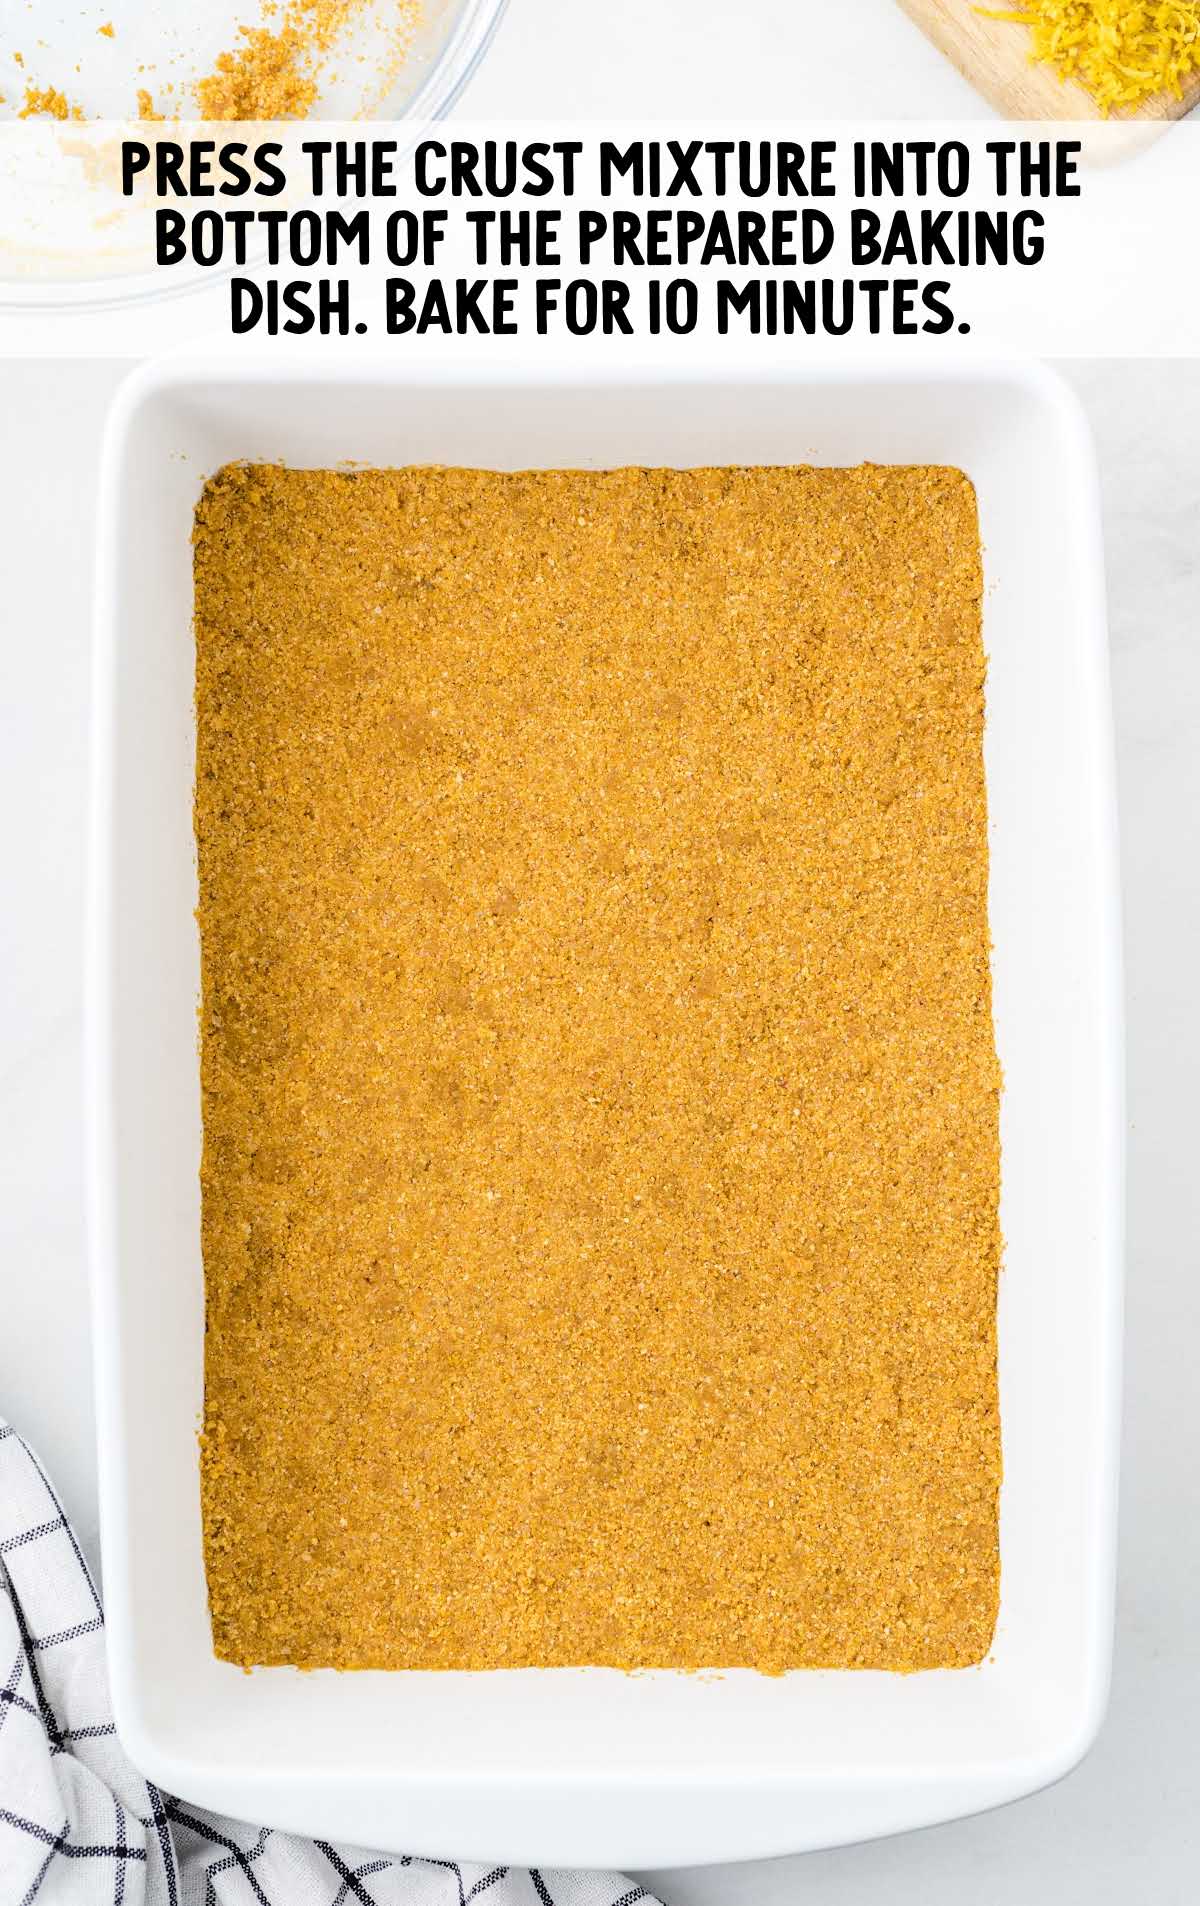 graham cracker crumb mixture spread at the bottom of a baking dish